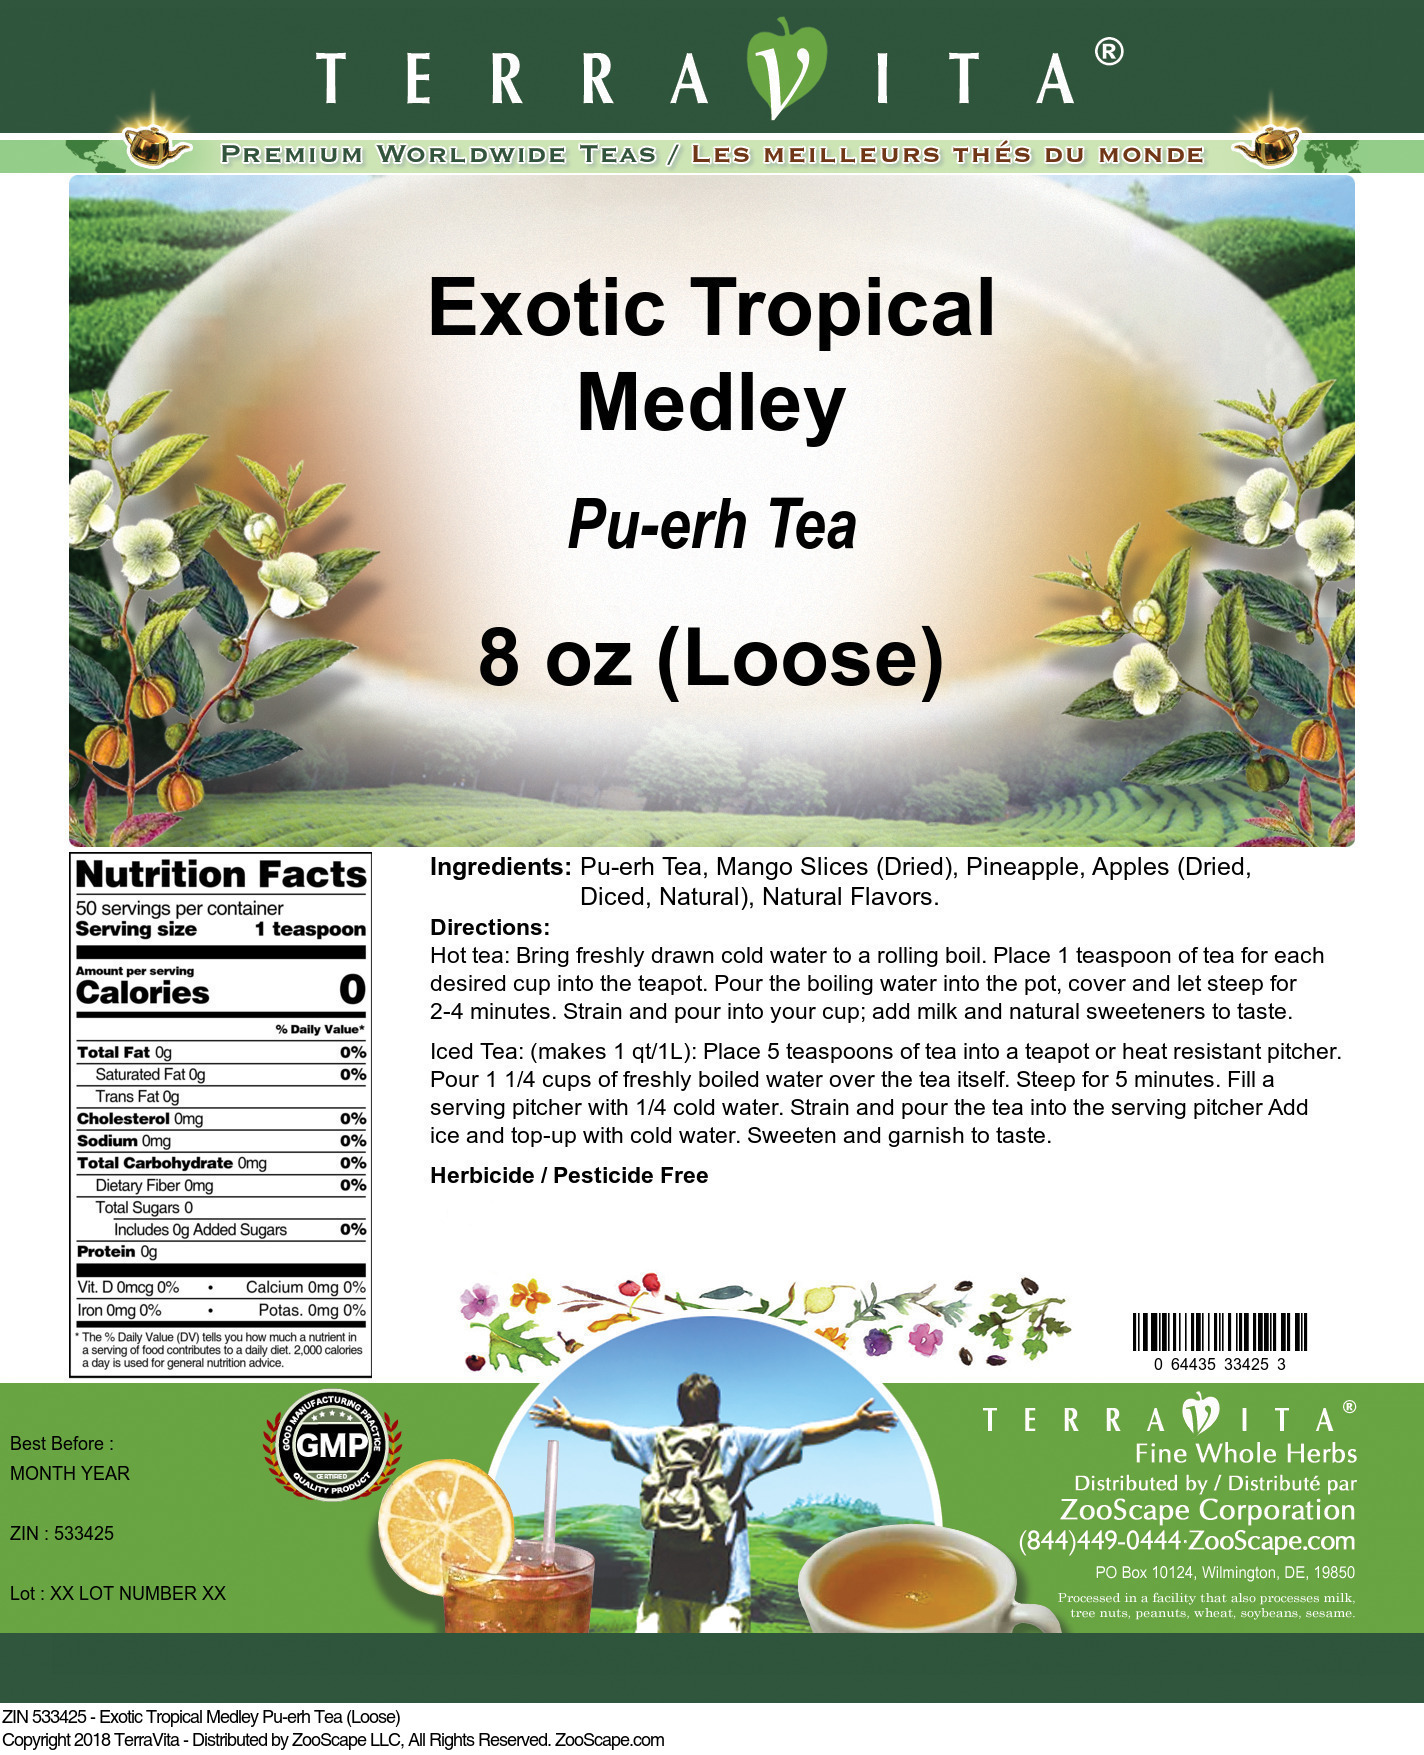 Exotic Tropical Medley Pu-erh Tea (Loose) - Label